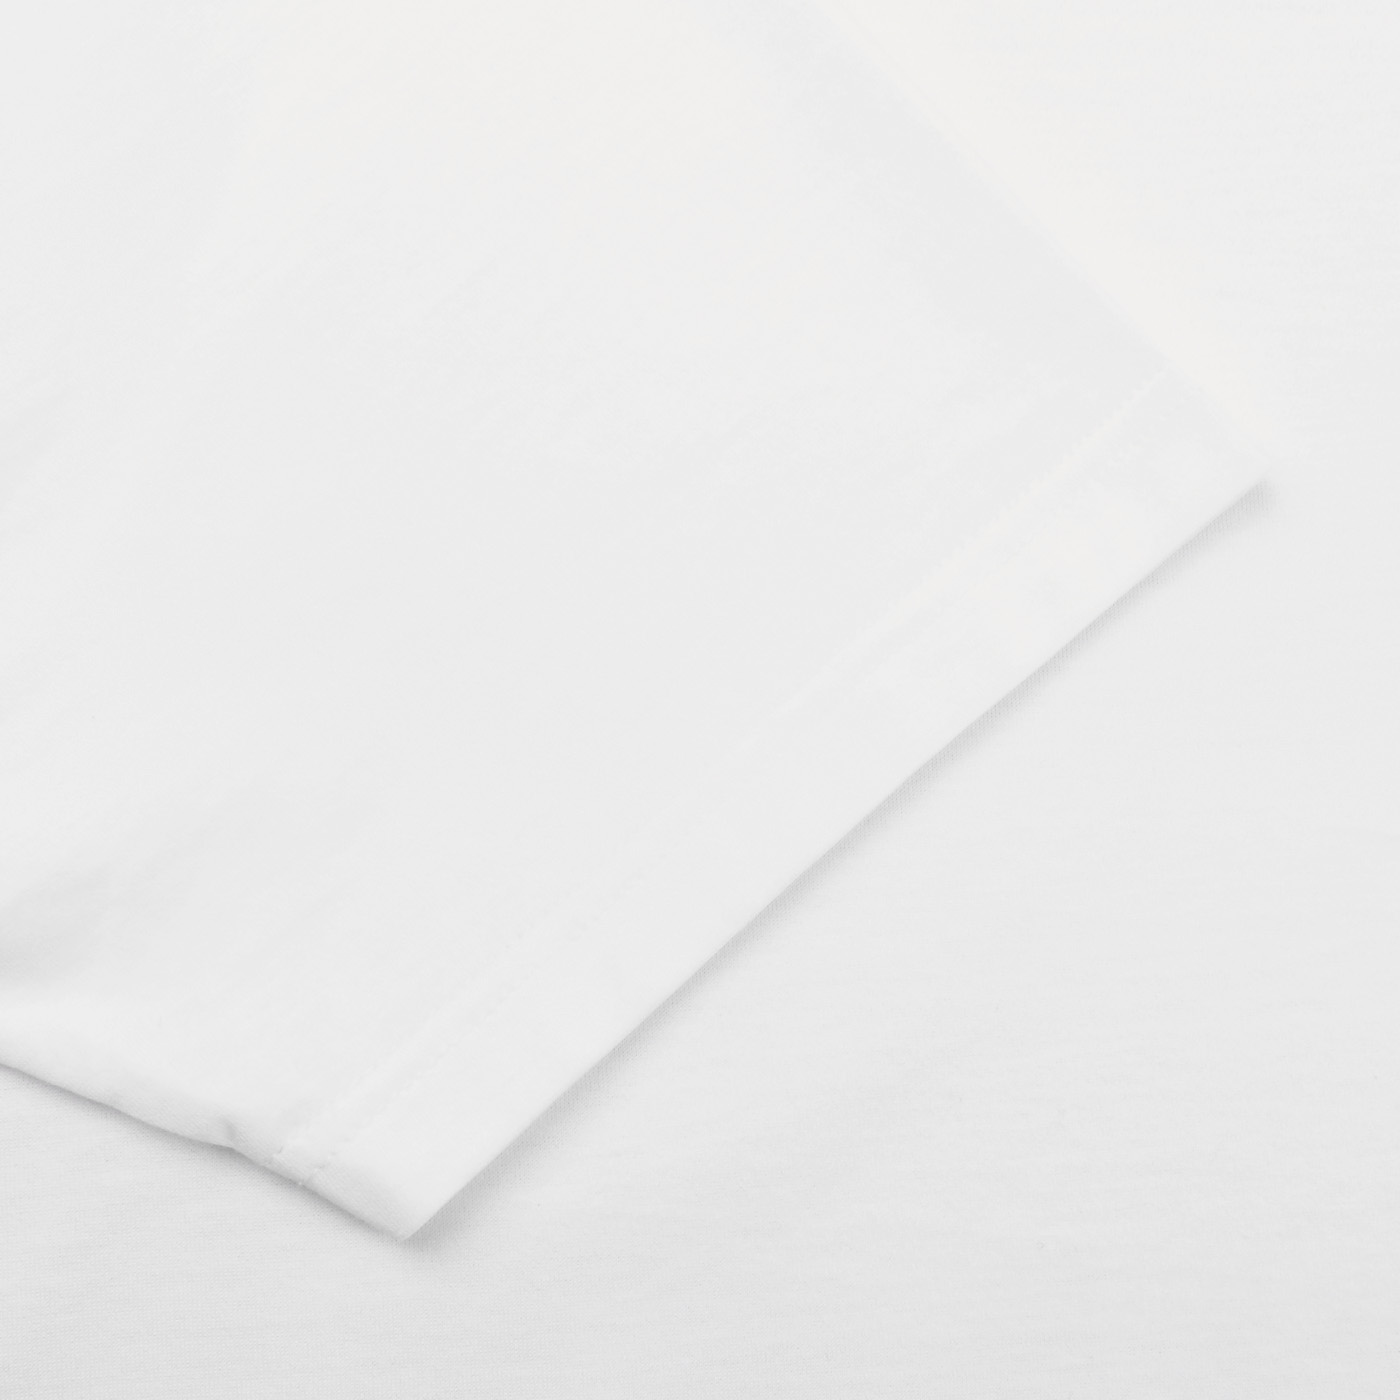 Sunspel - White Classic Cotton T-Shirt | Baltzar